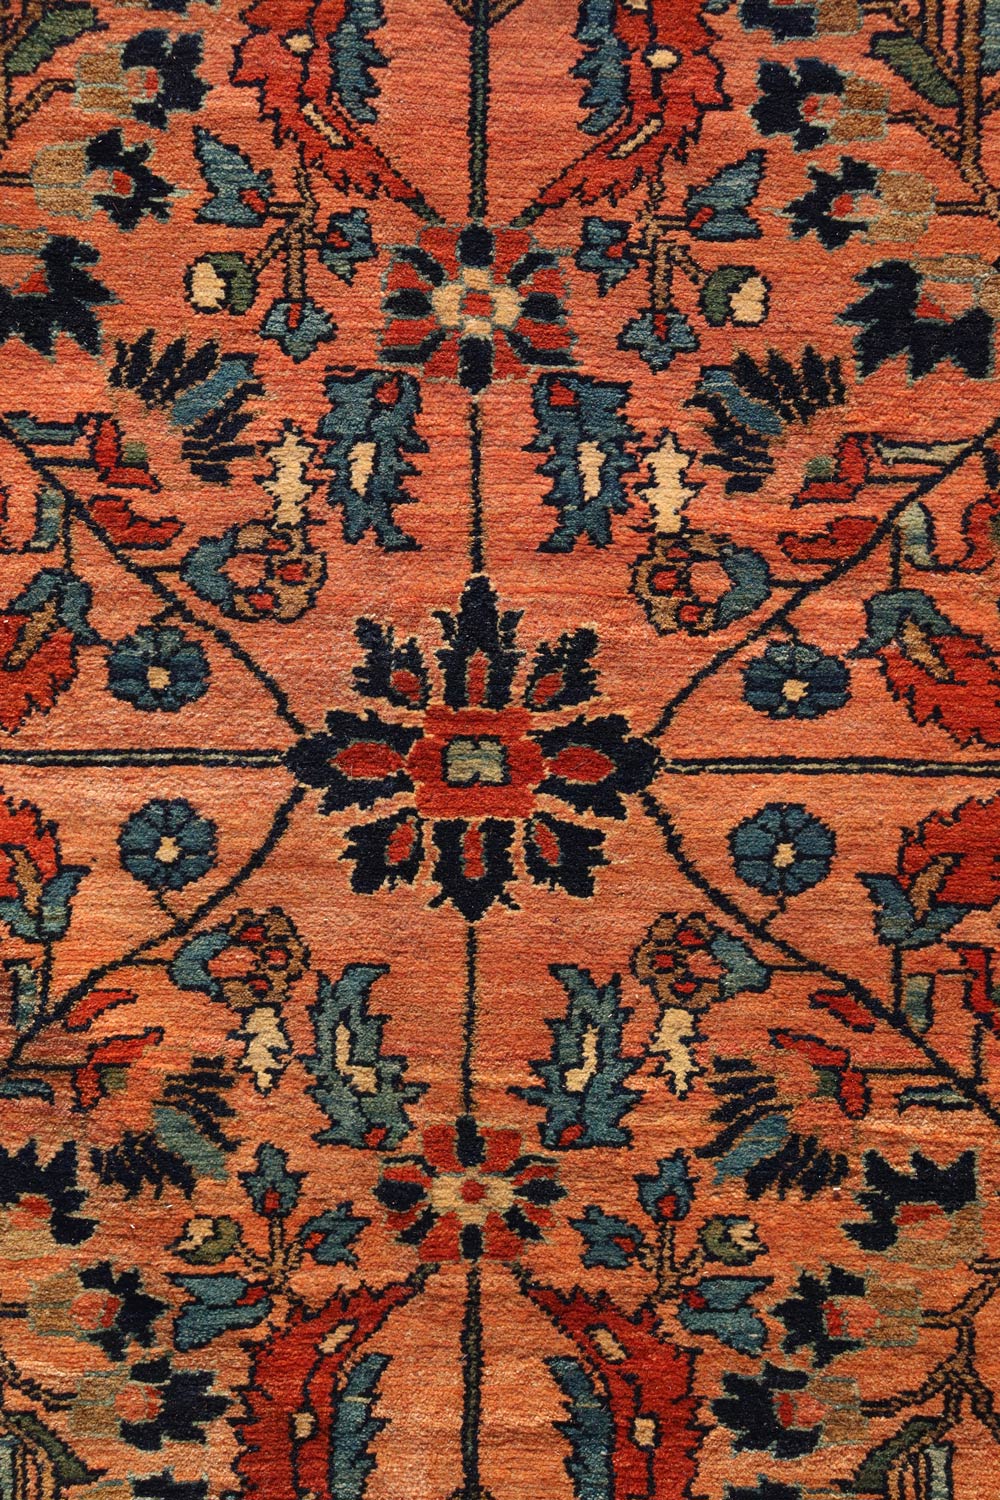 Antique Lilihan Handwoven Traditional Rug, J67810